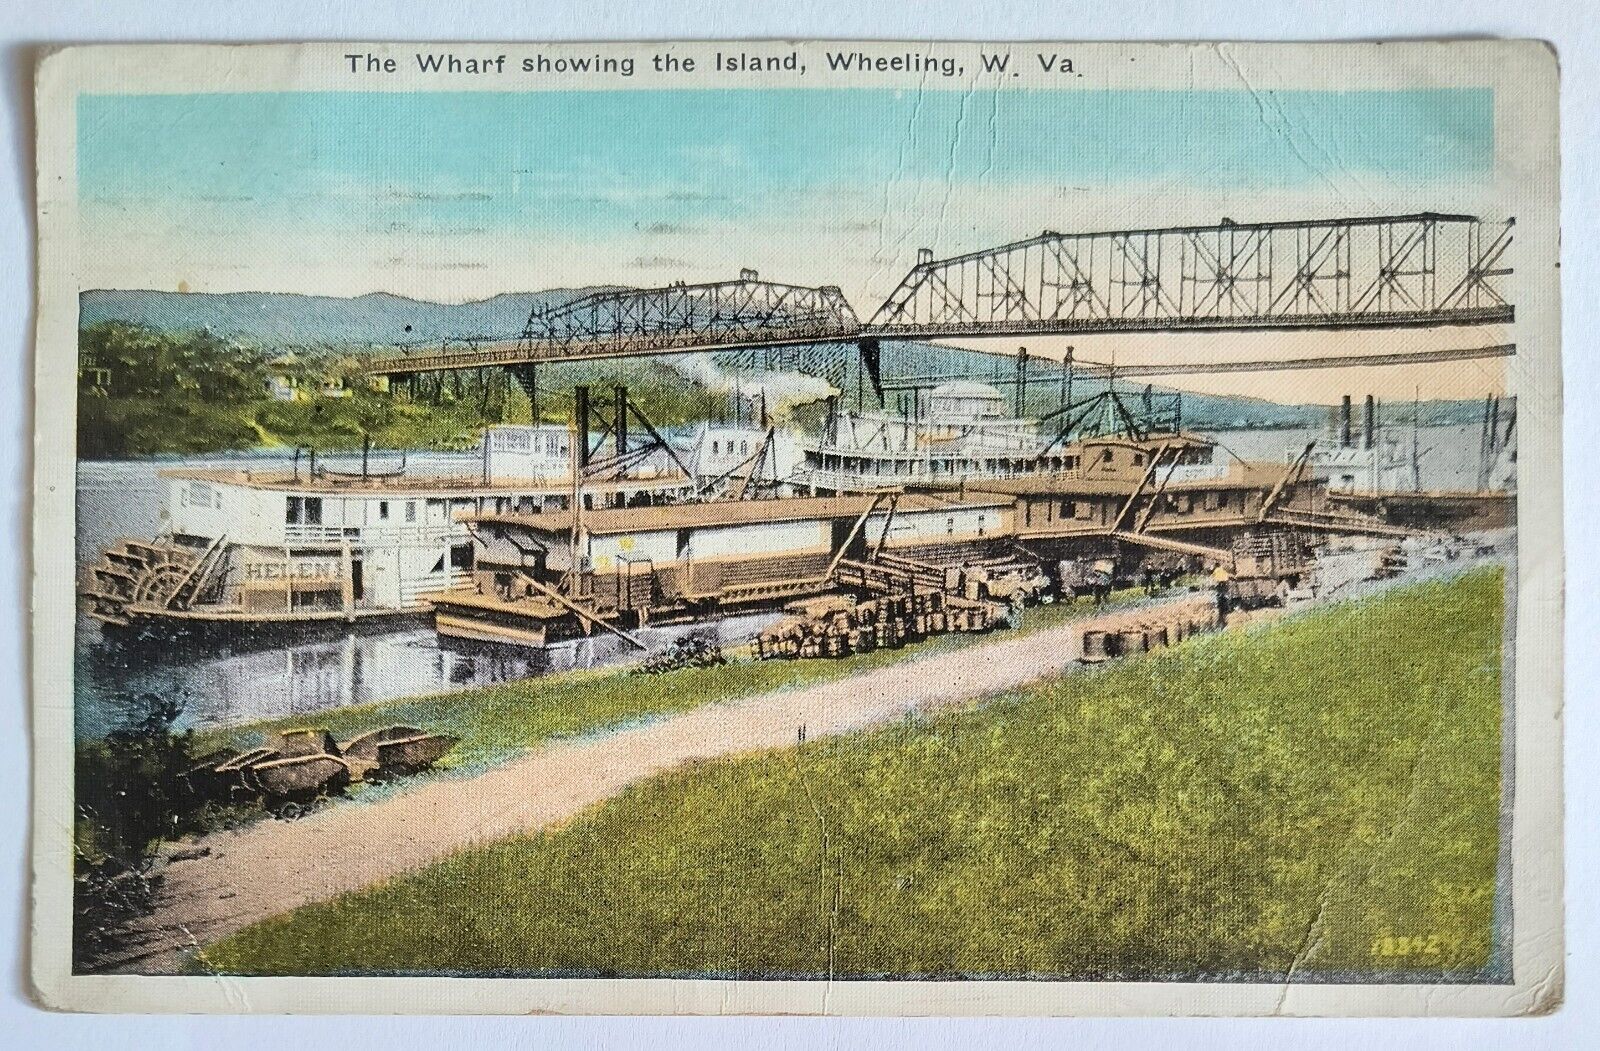 Wheeling WV West Virginia Wharf showing the Island Vintage 1925 Postcard C1